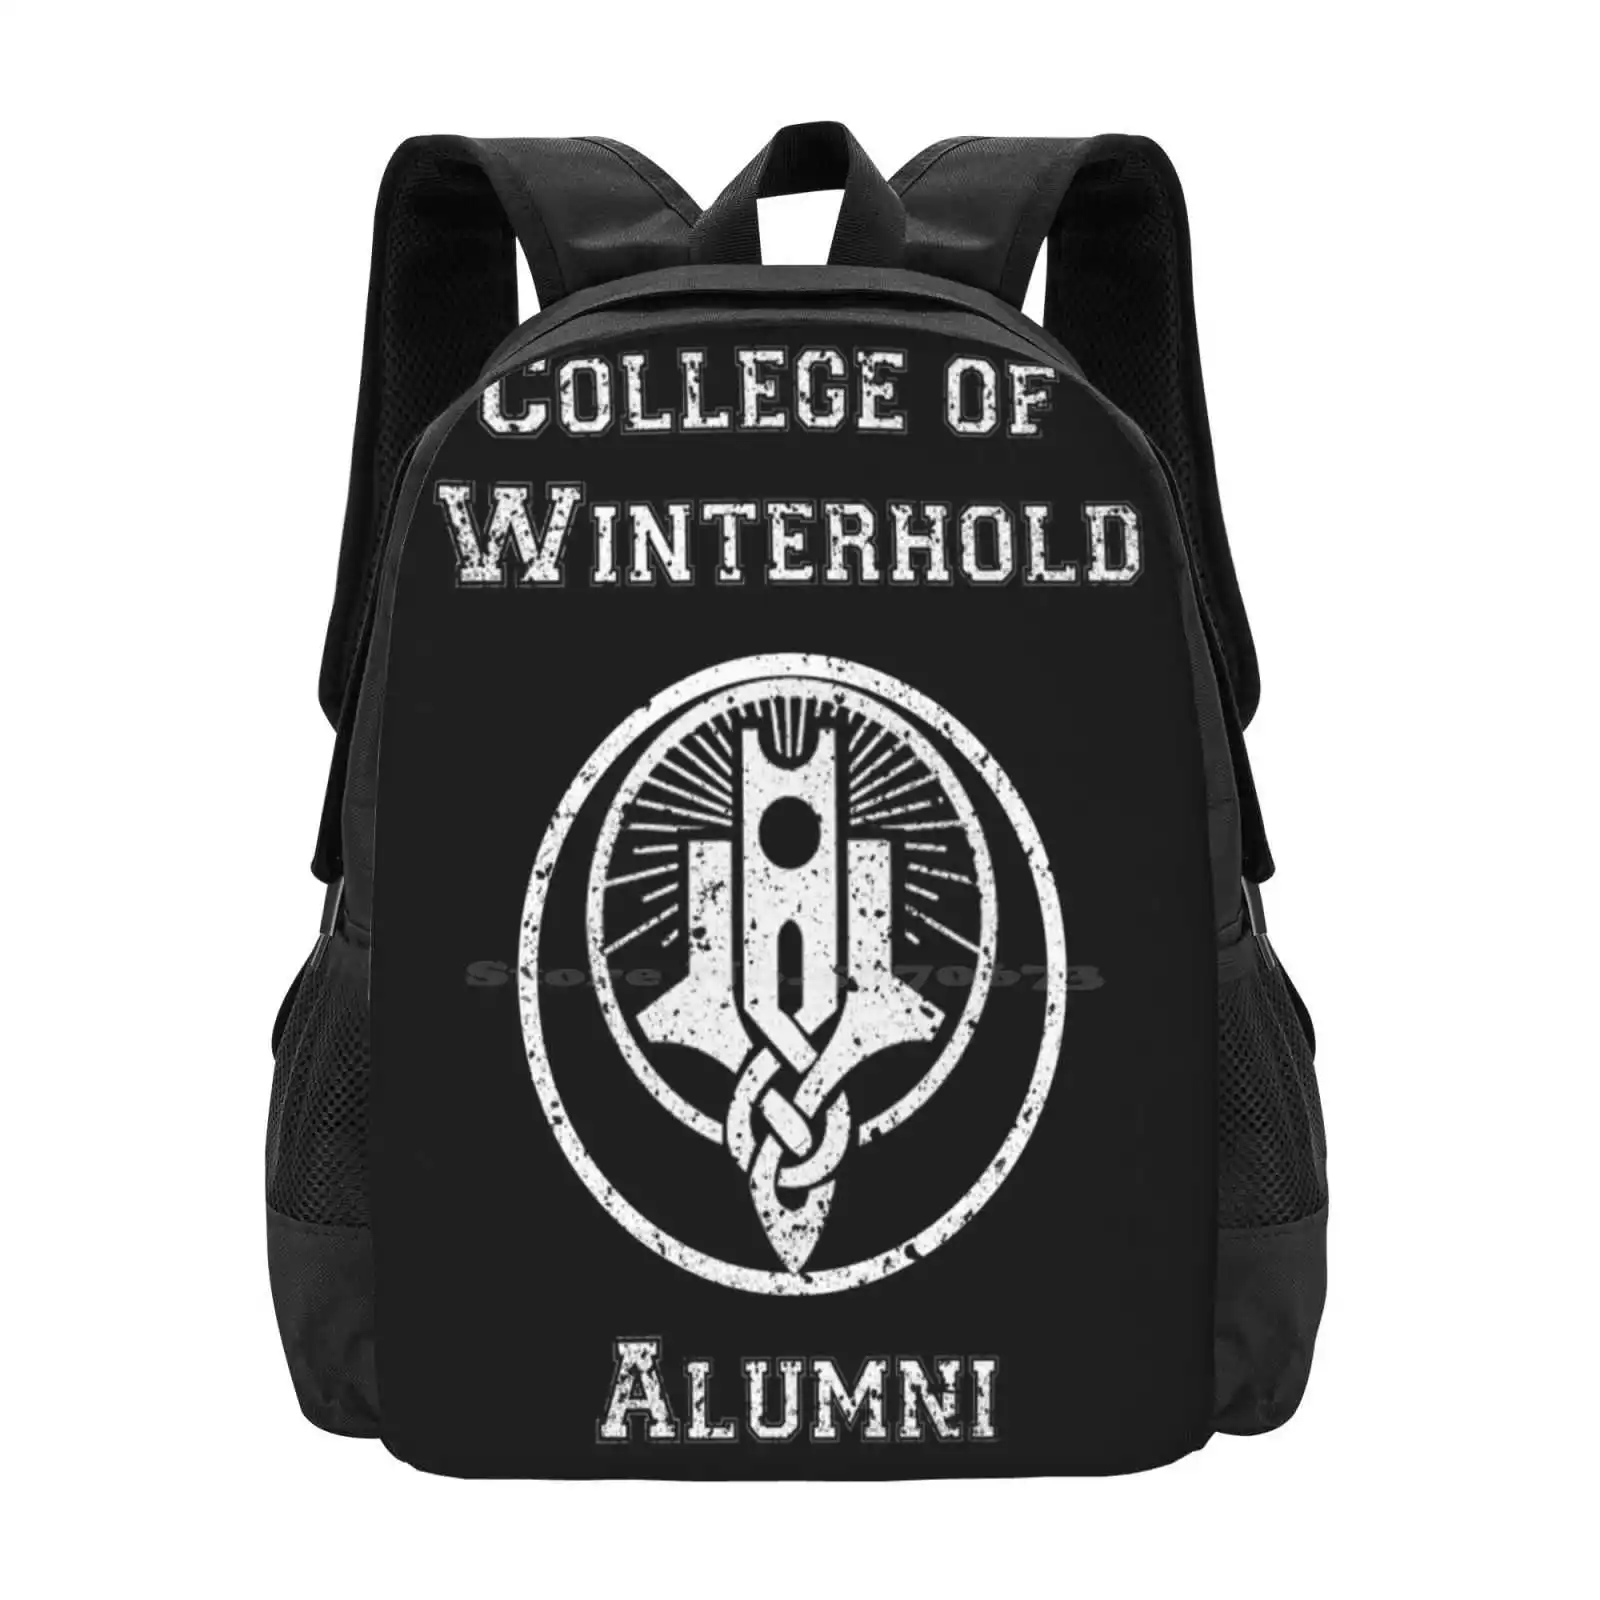 

College Of Winterhold Alumni Hot Sale Backpack Fashion Bags Skyrim Winterhold Mages The Elder Scrolls Tes V